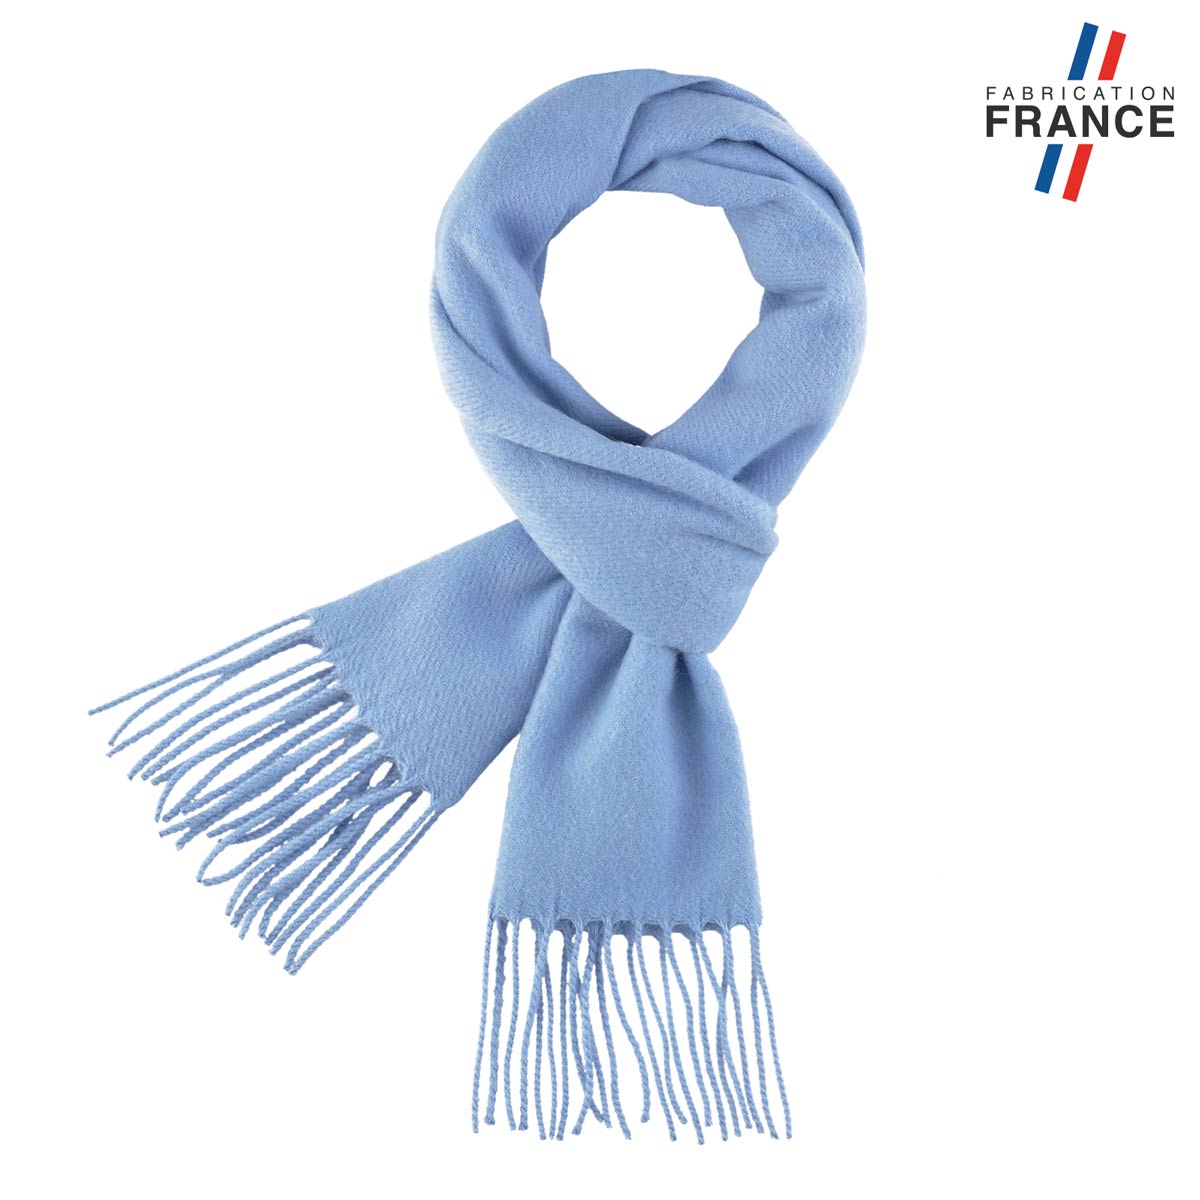 AT-05133_F12-1FR_Echarpe-a-franges-bleu-ciel-fabrication-francaise